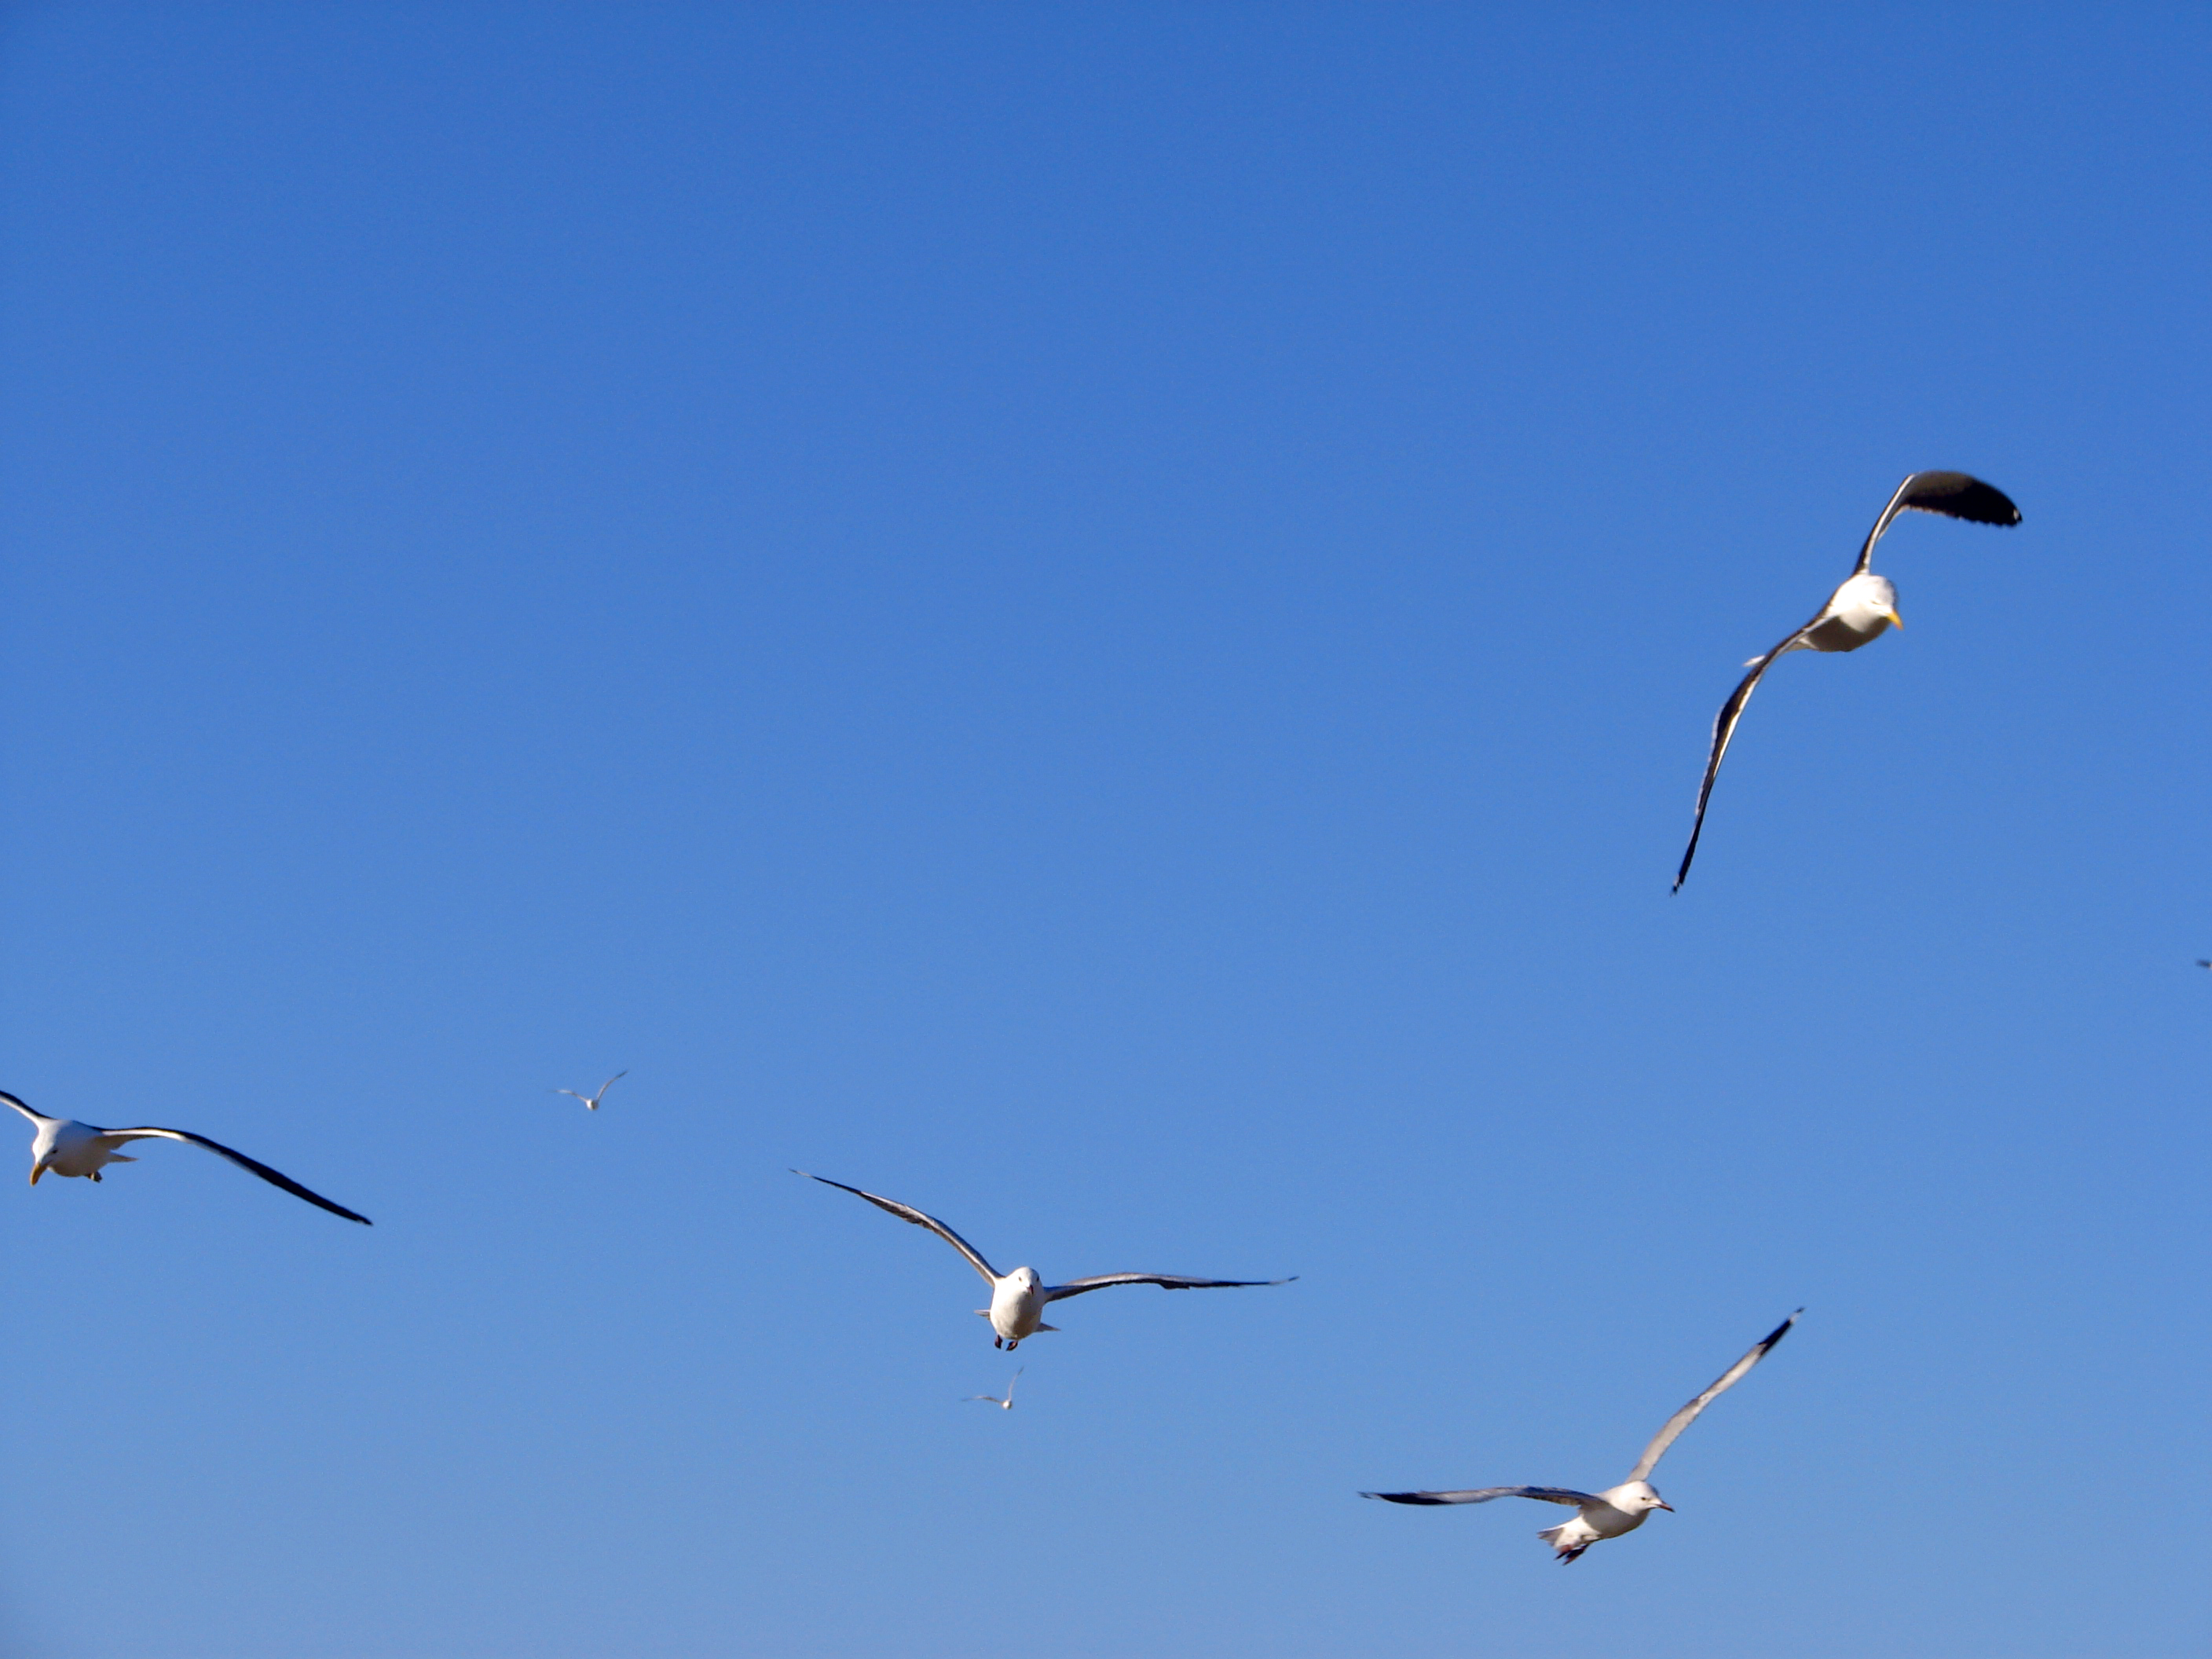 Flight of the seagulls photo